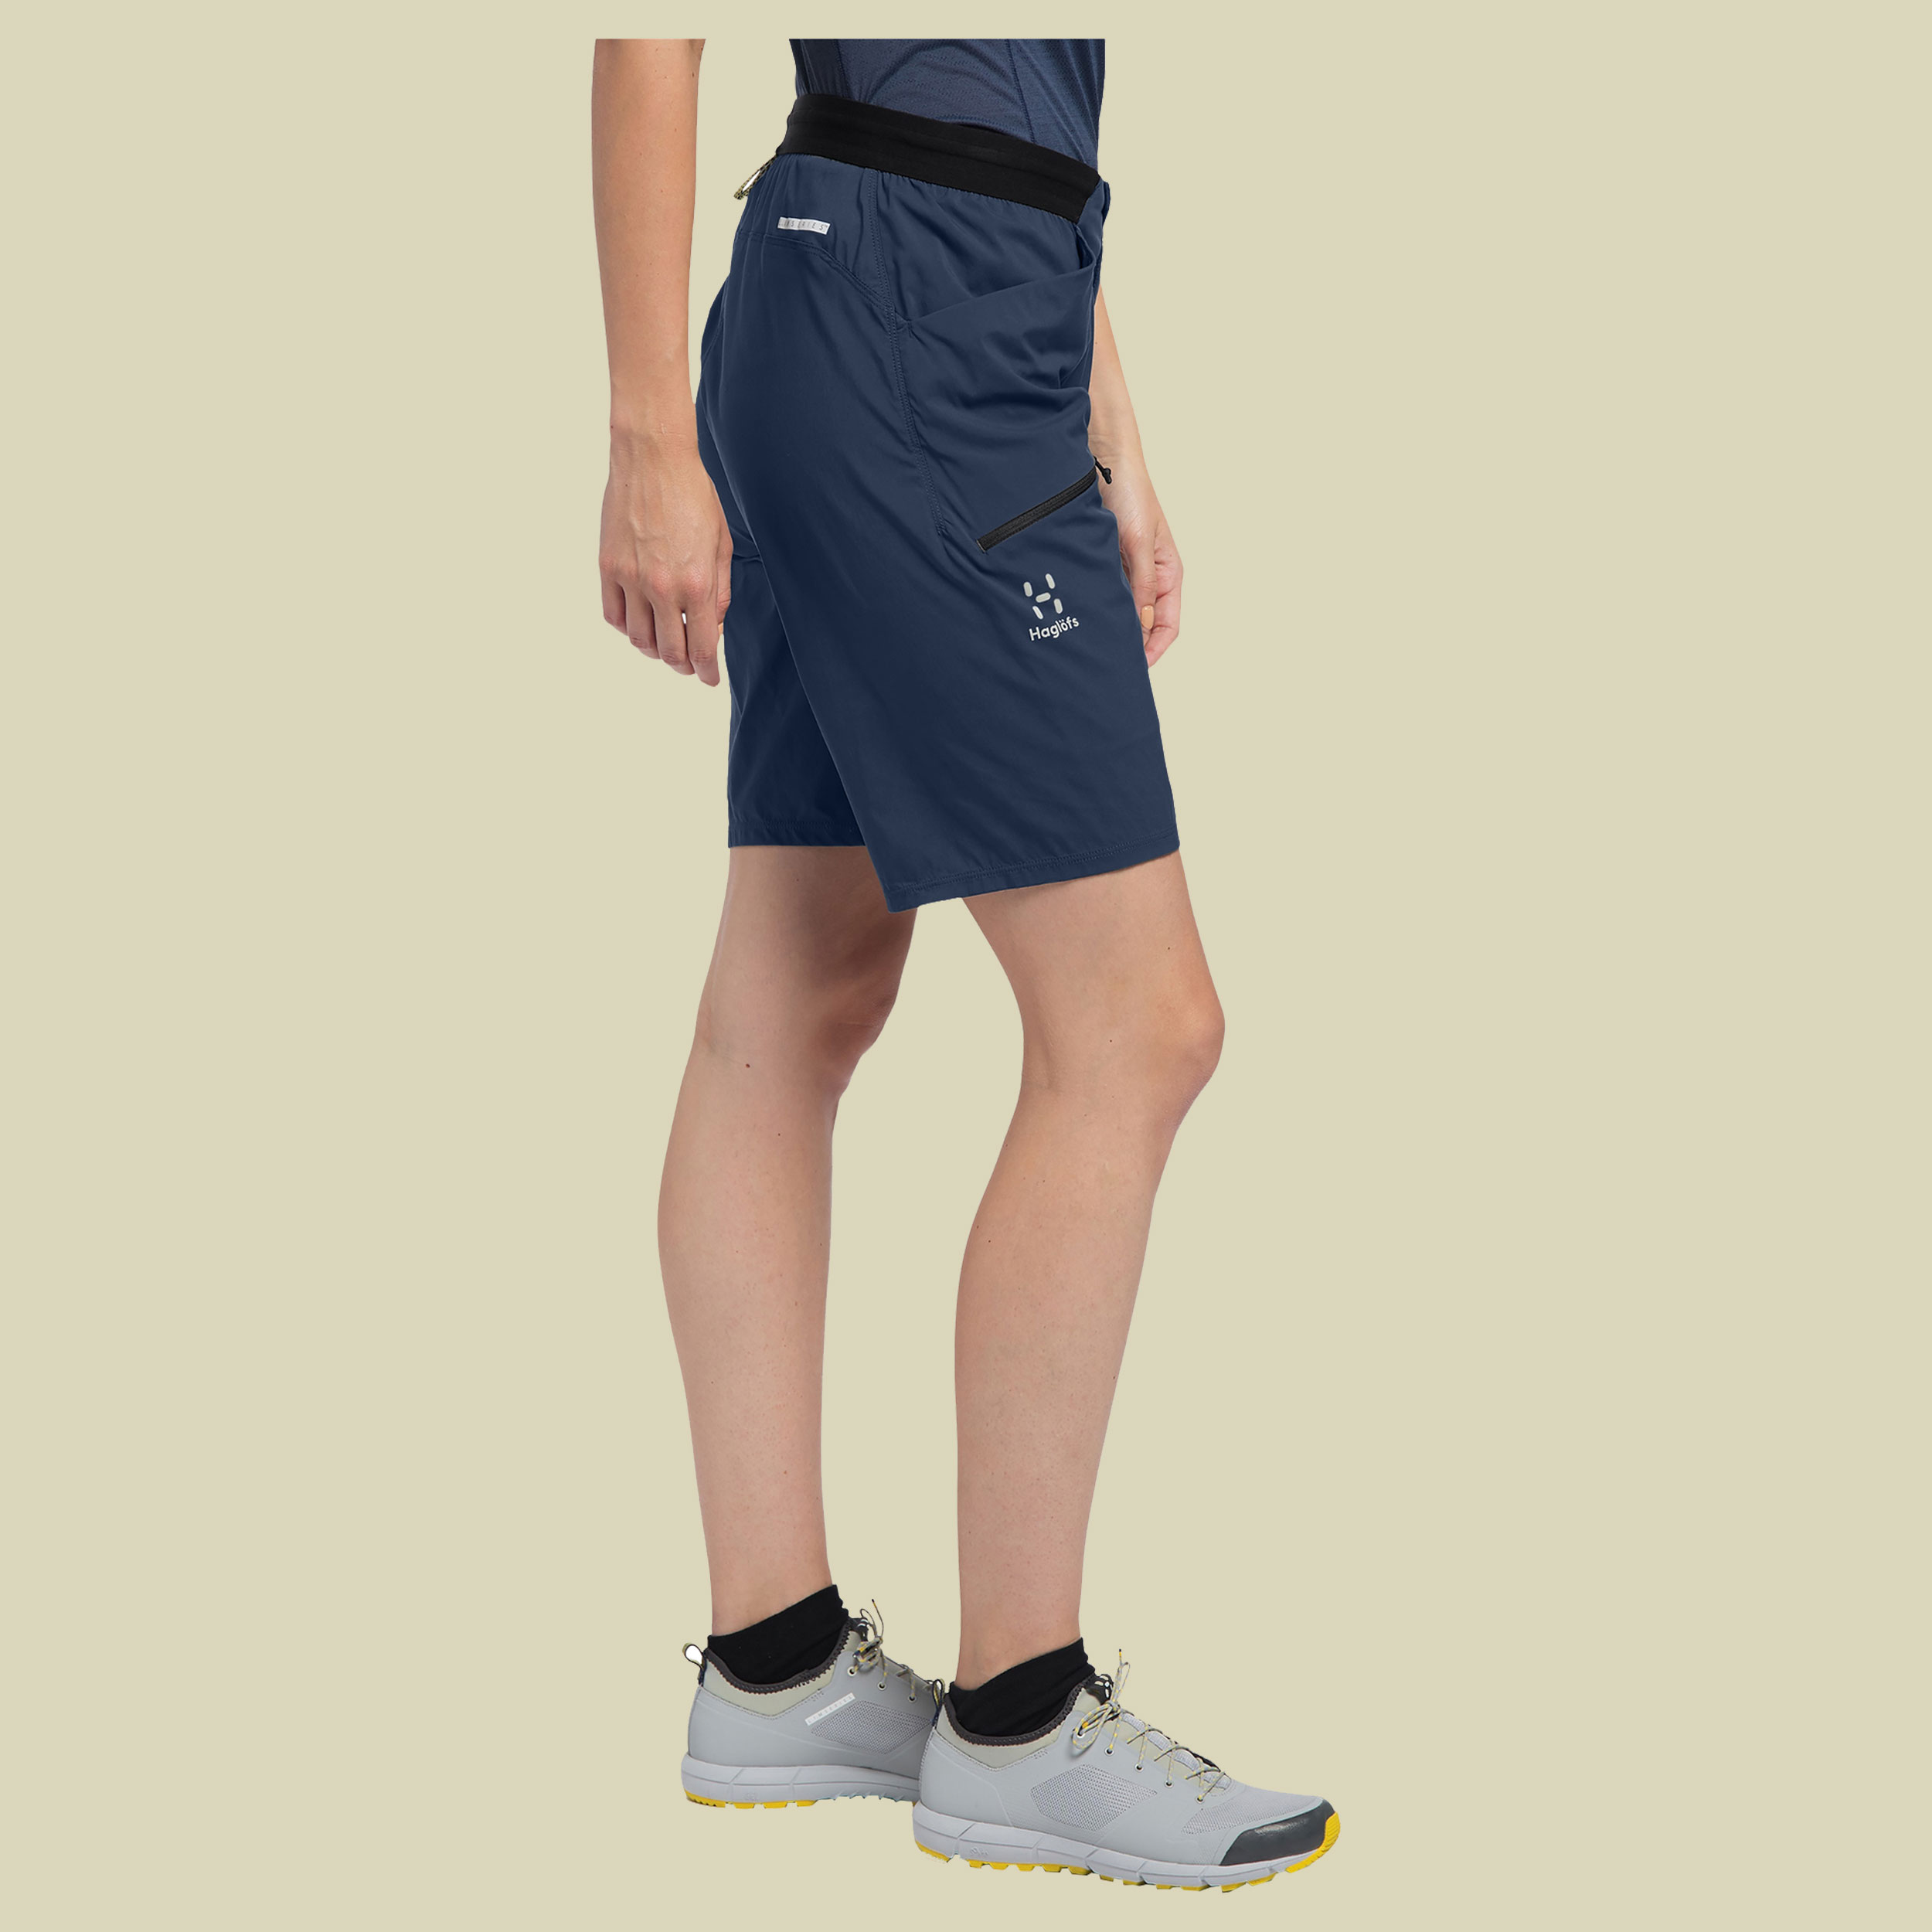 L.I.M Fuse Shorts Women Größe 40 Farbe tarn blue